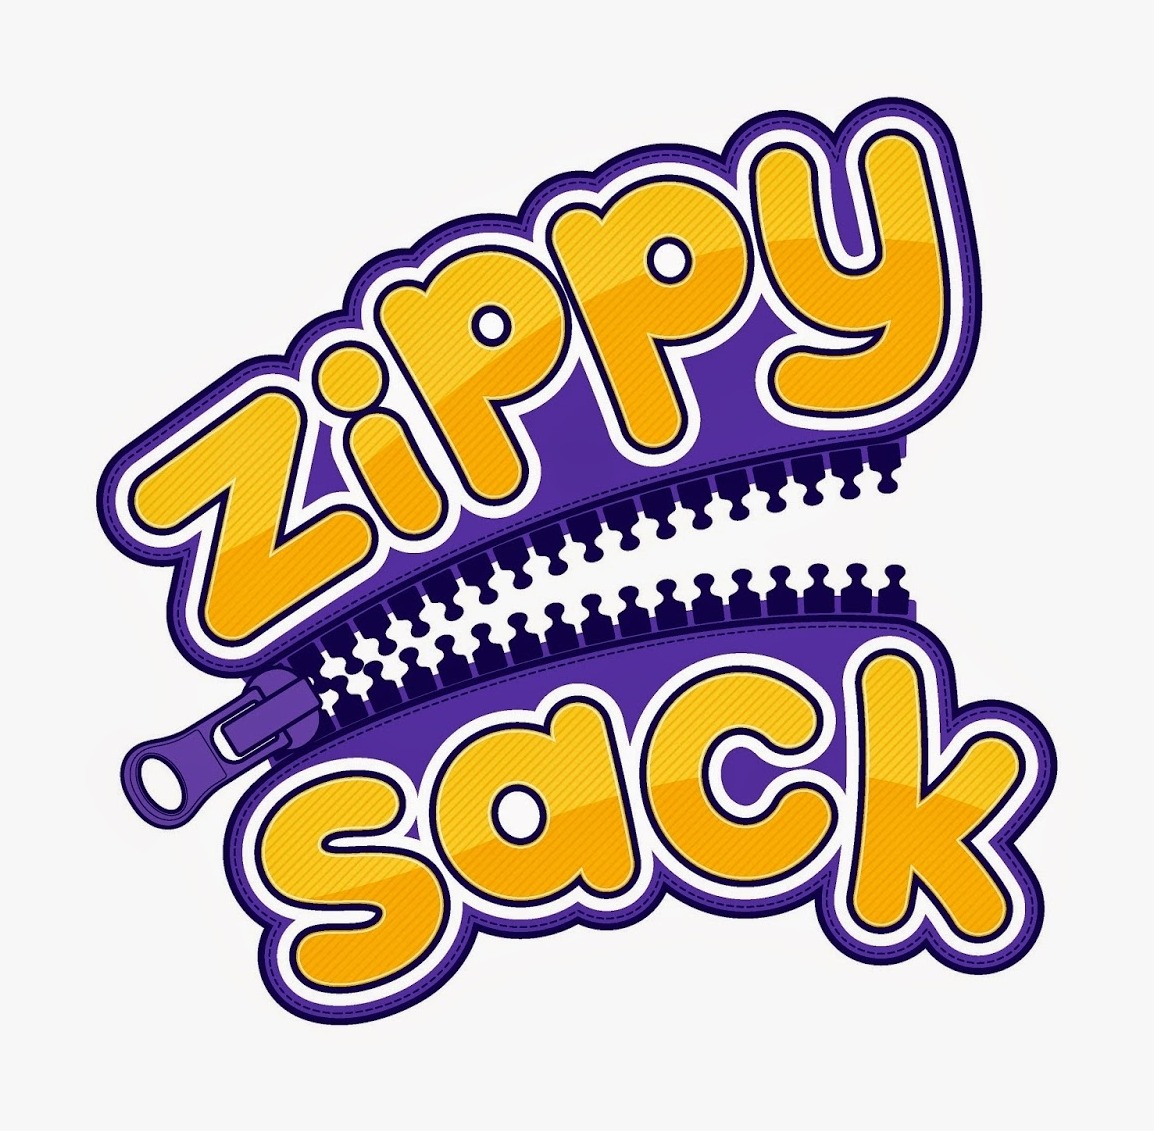 ZippySack coupon codes, promo codes and deals